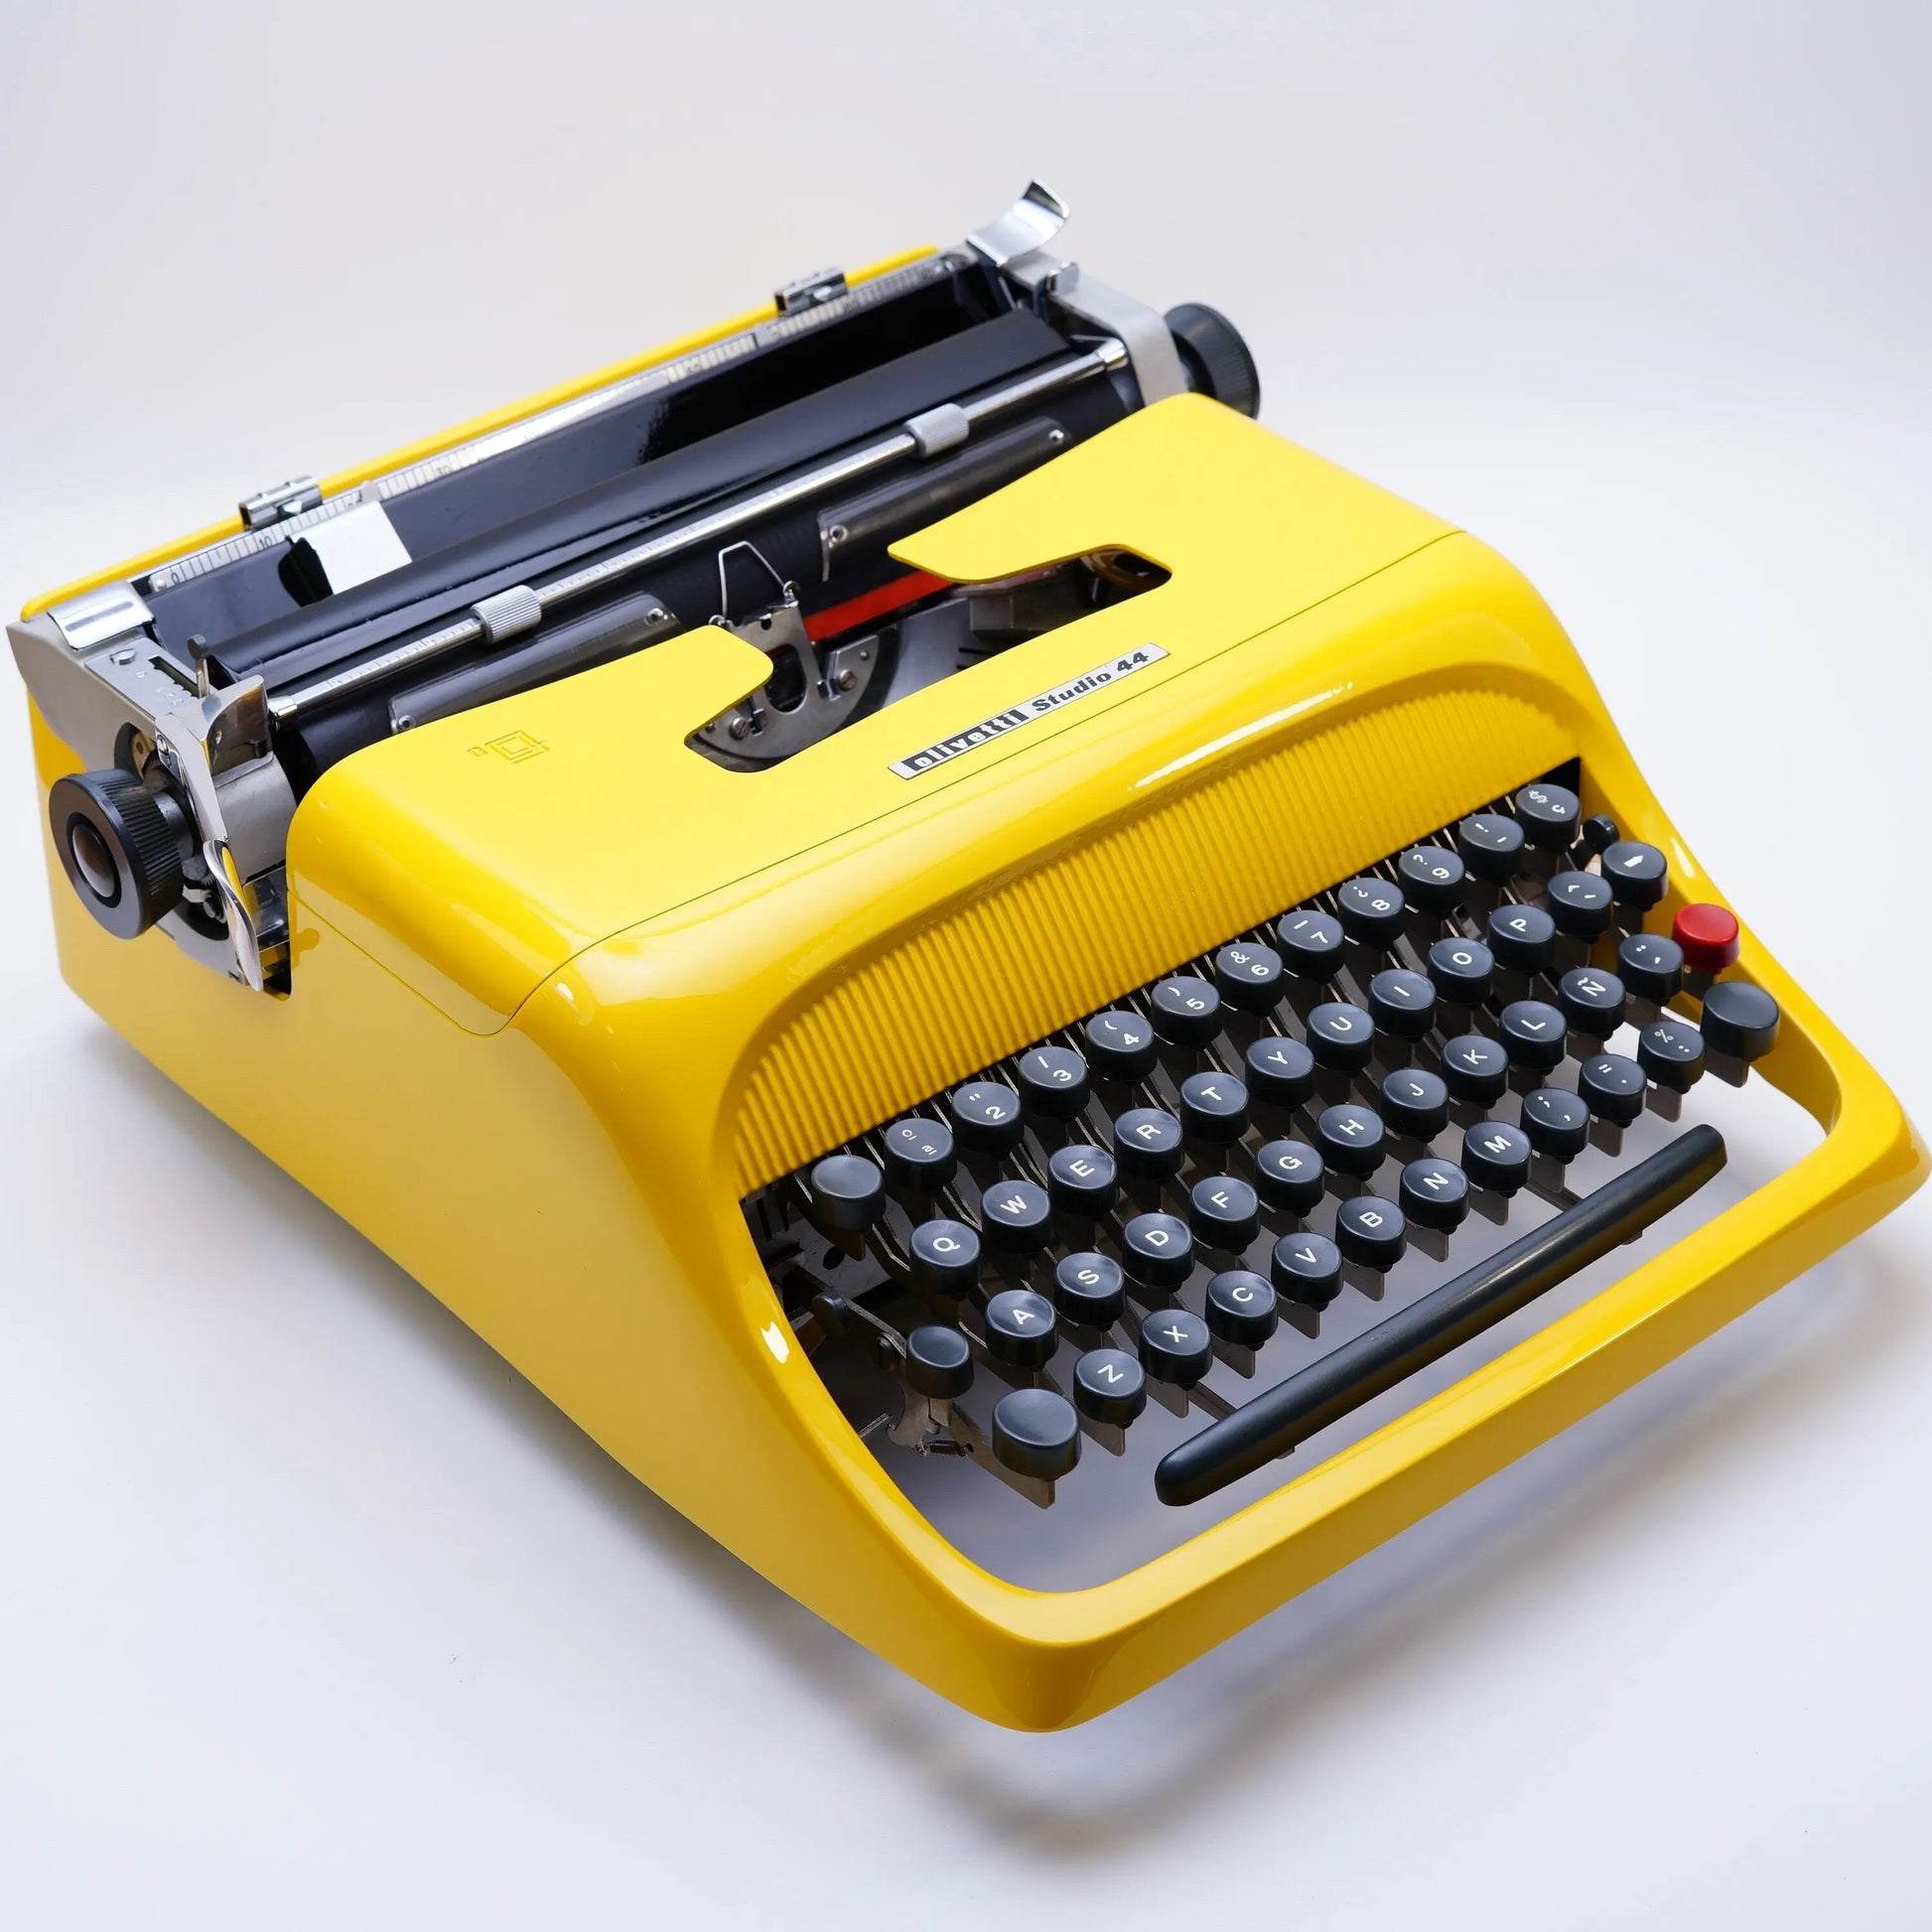 Limited Edition Olivetti Studio 44 Yellow Typewriter, Vintage, Manual Portable, Professionally Serviced by Typewriter.Company - ElGranero Typewriter.Company